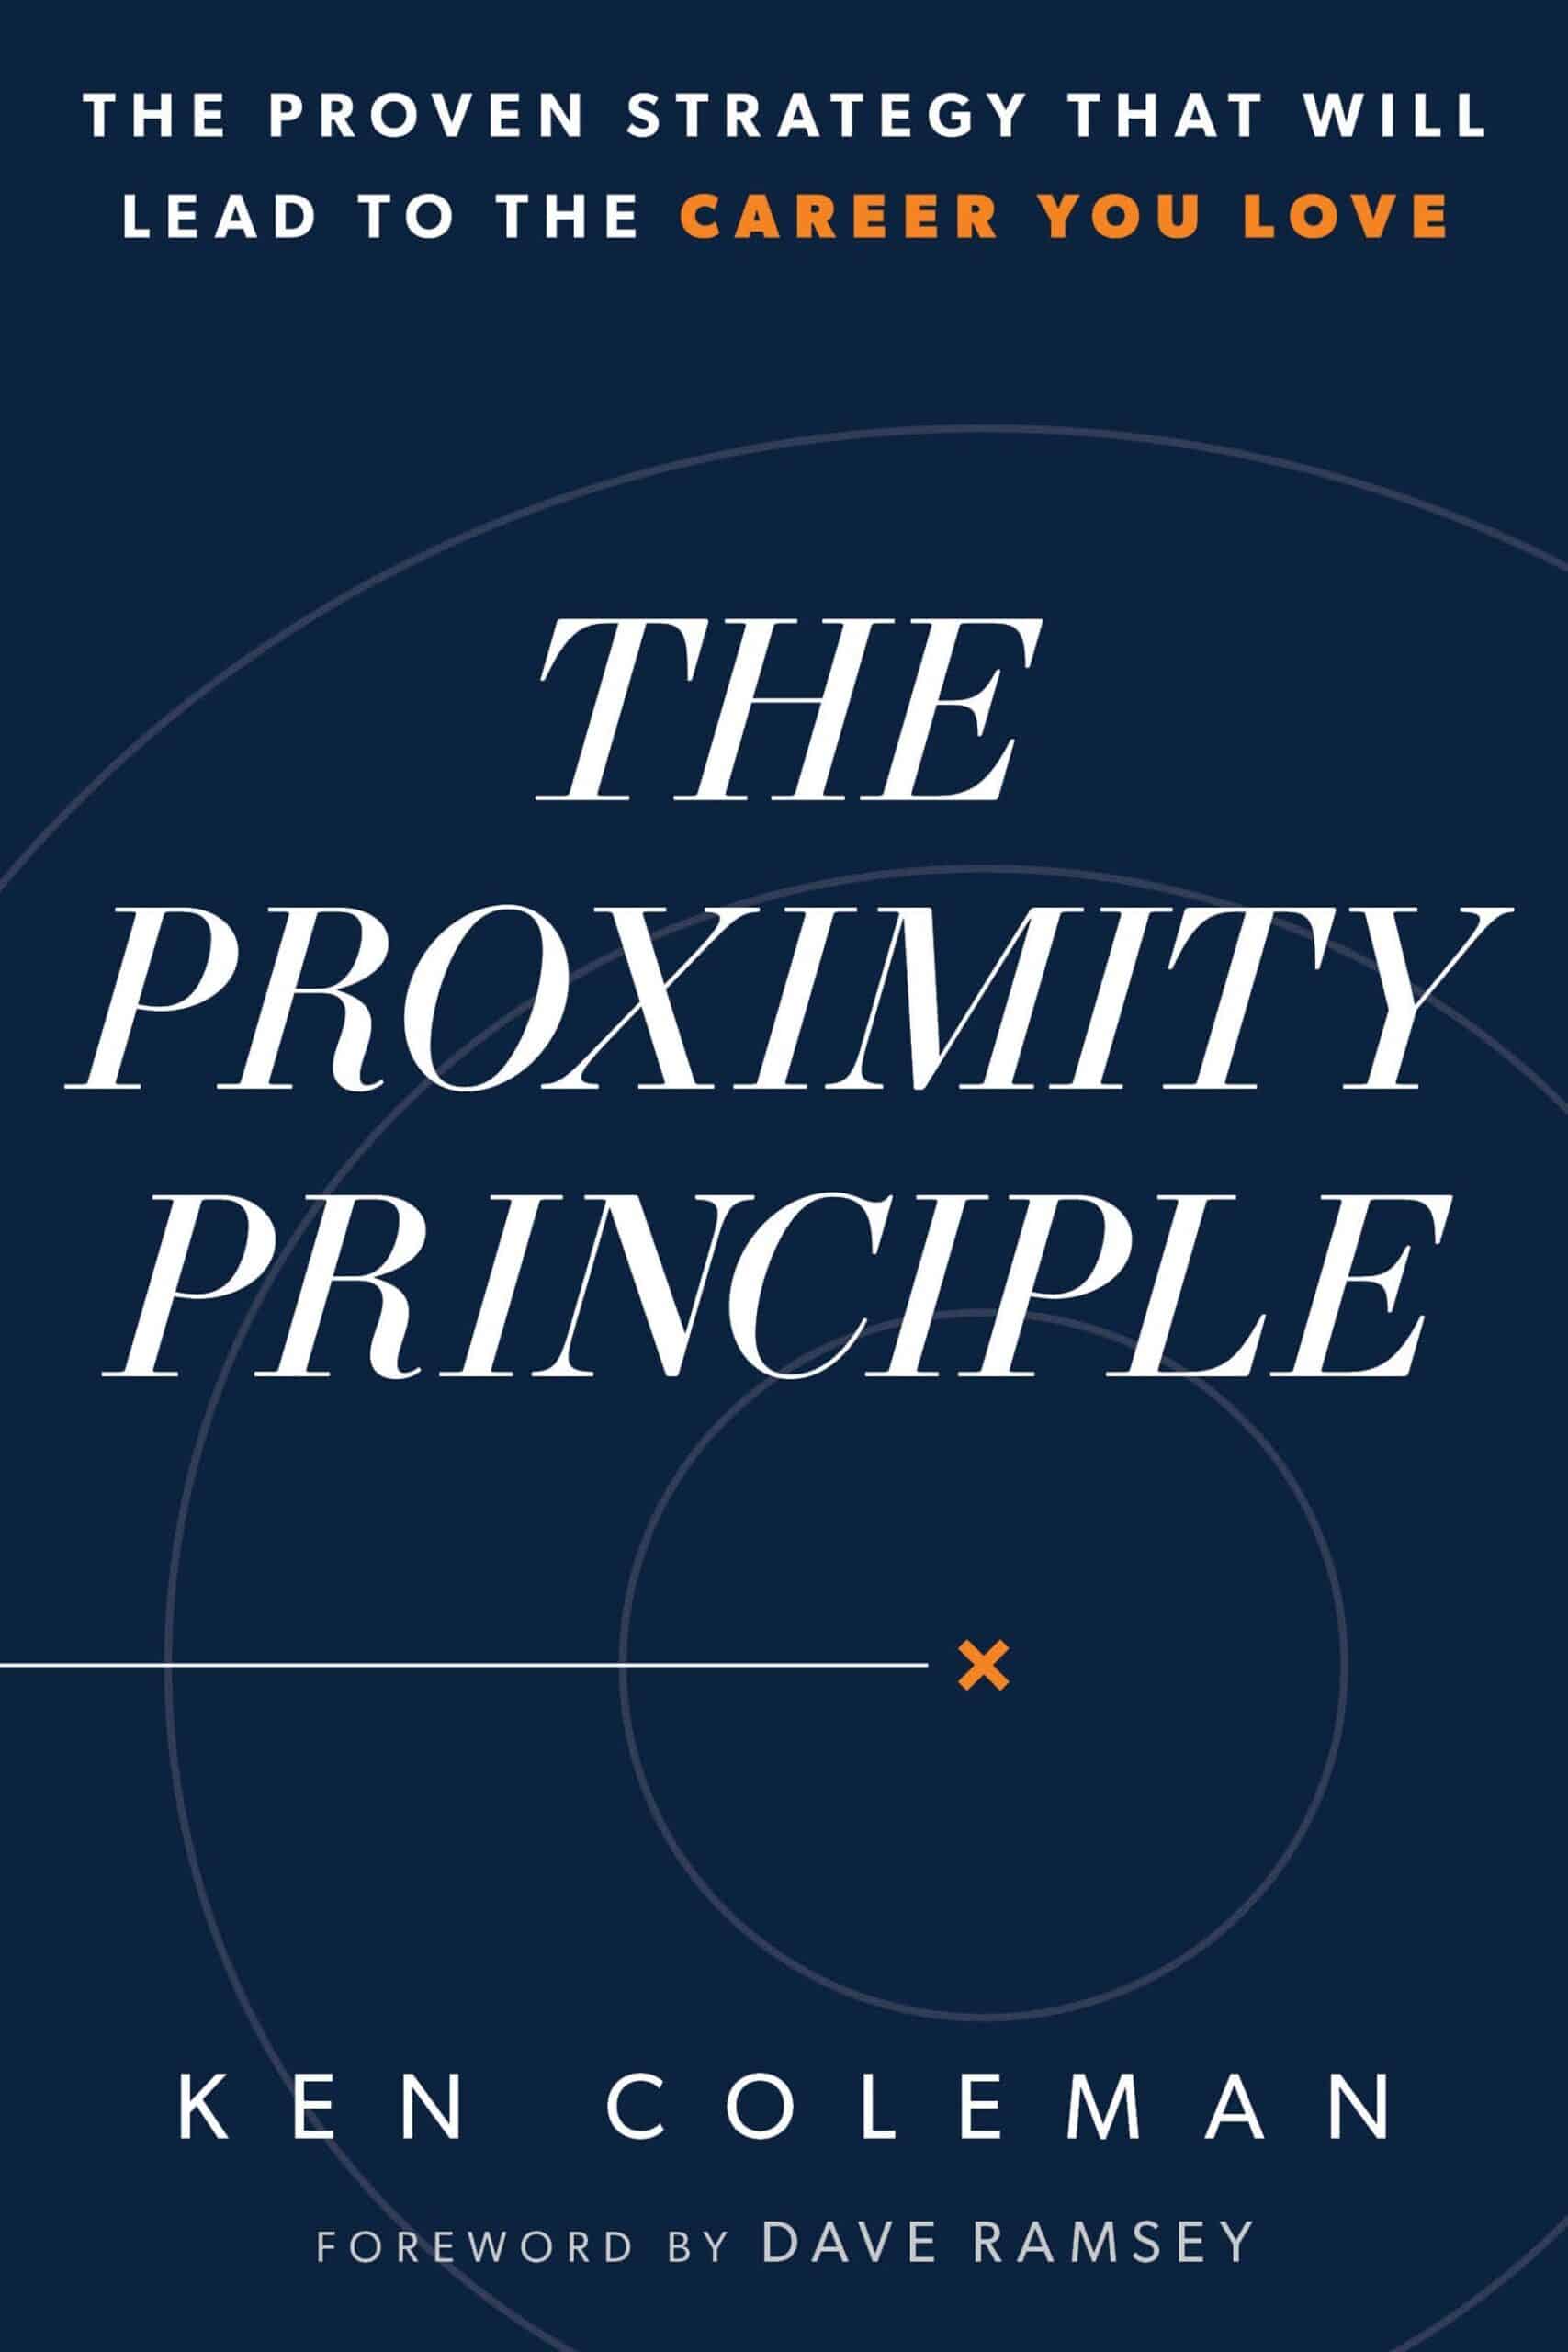 The Proximity Principle - Ken Coleman